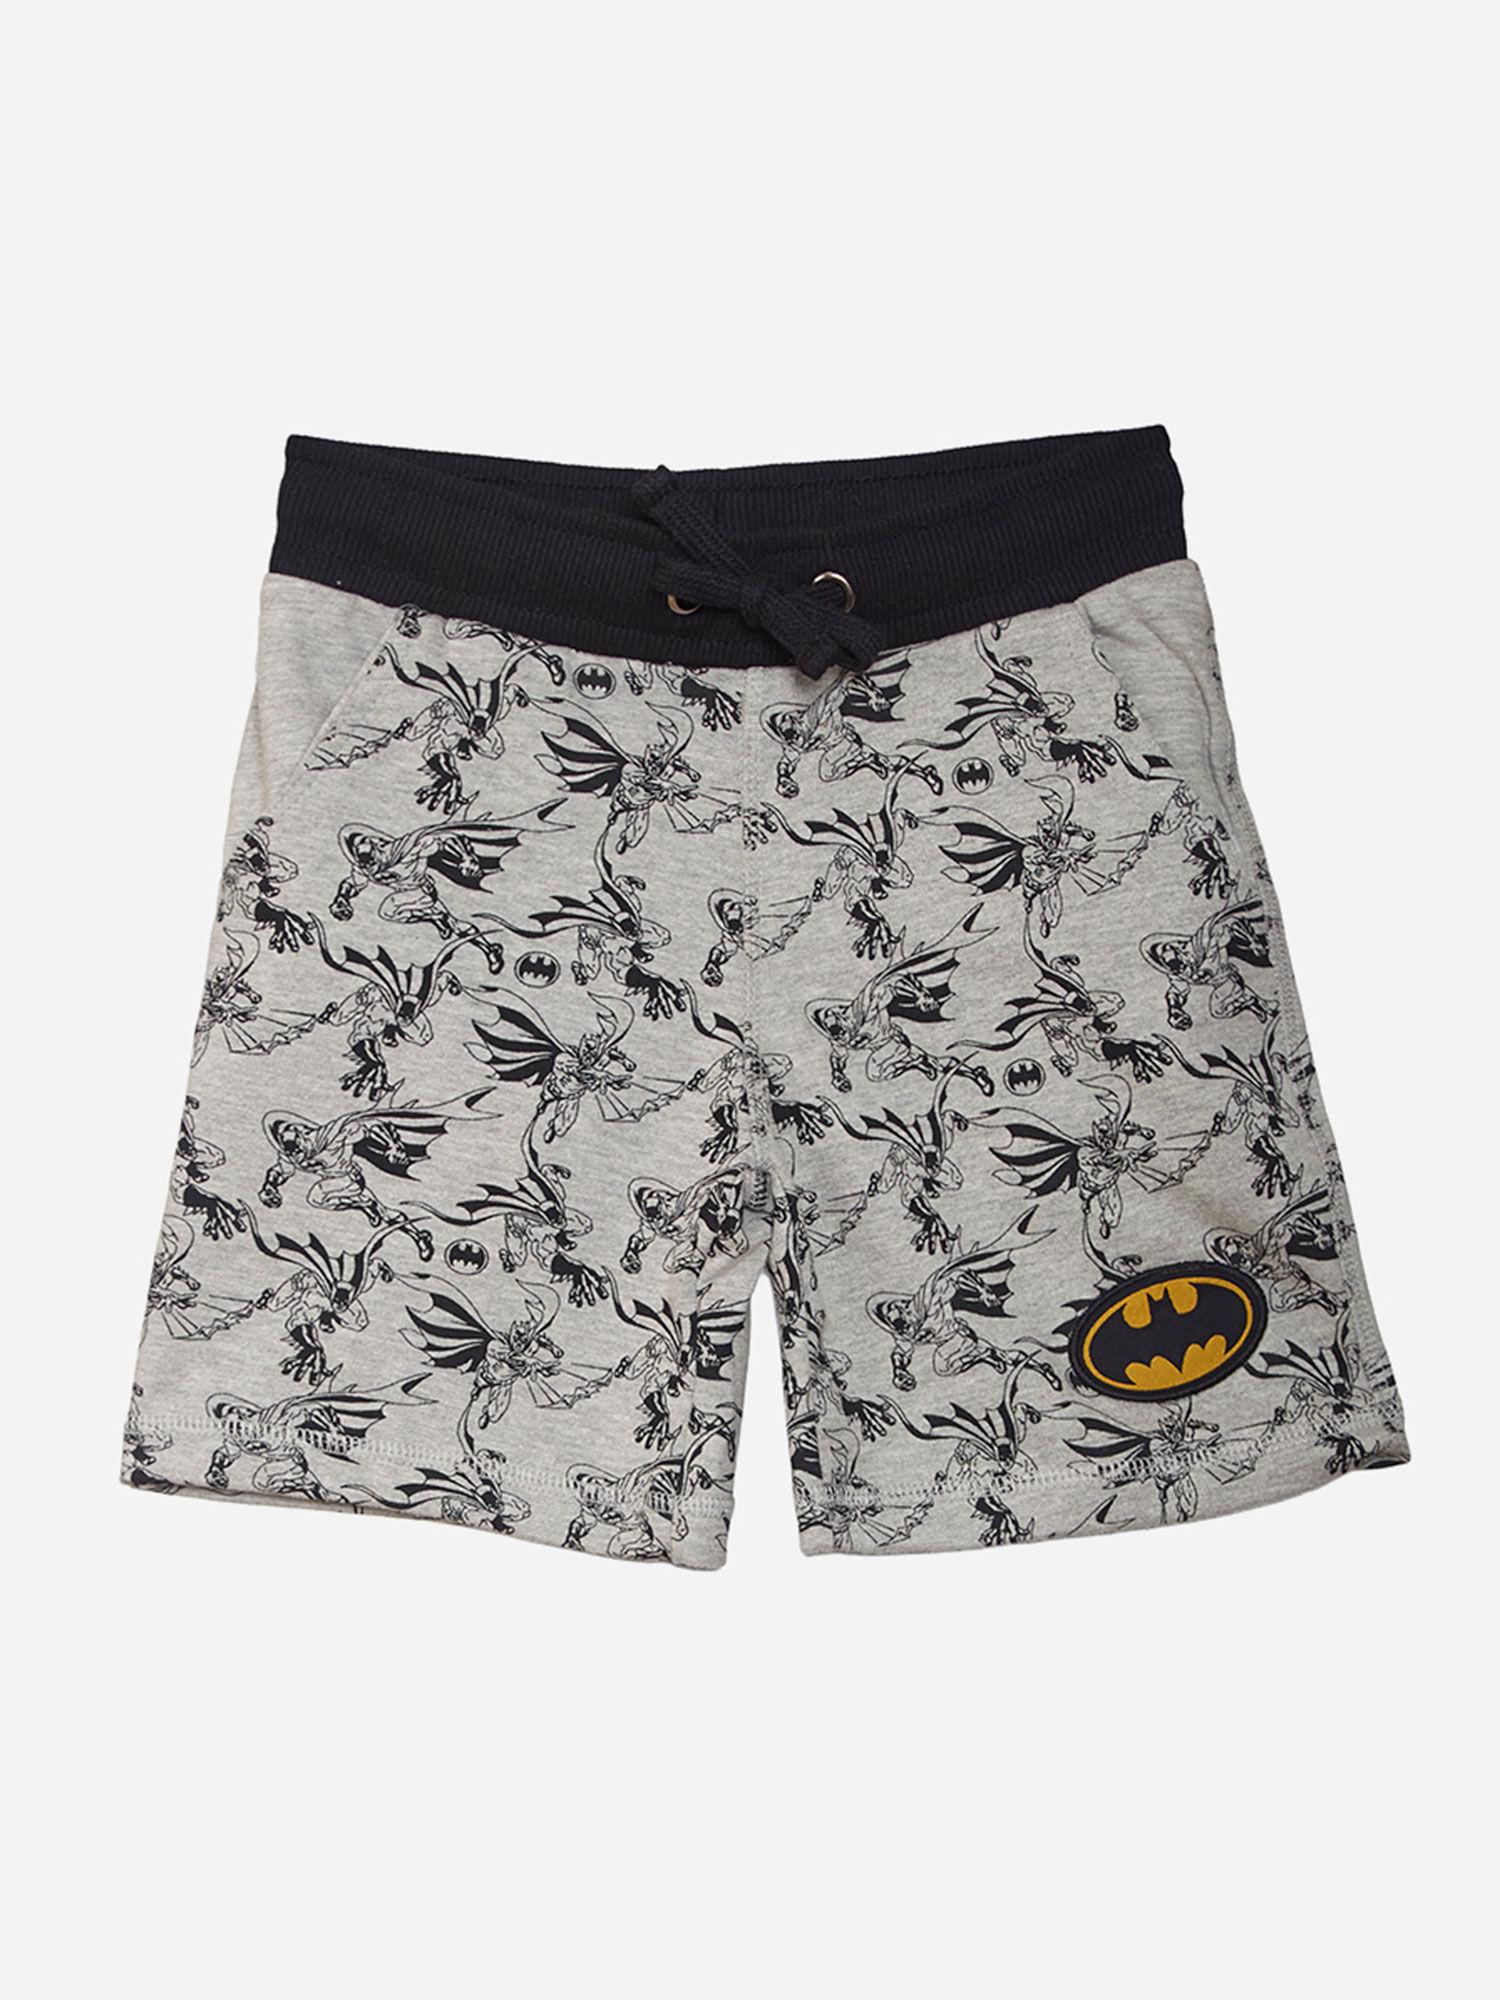 batman grey shorts